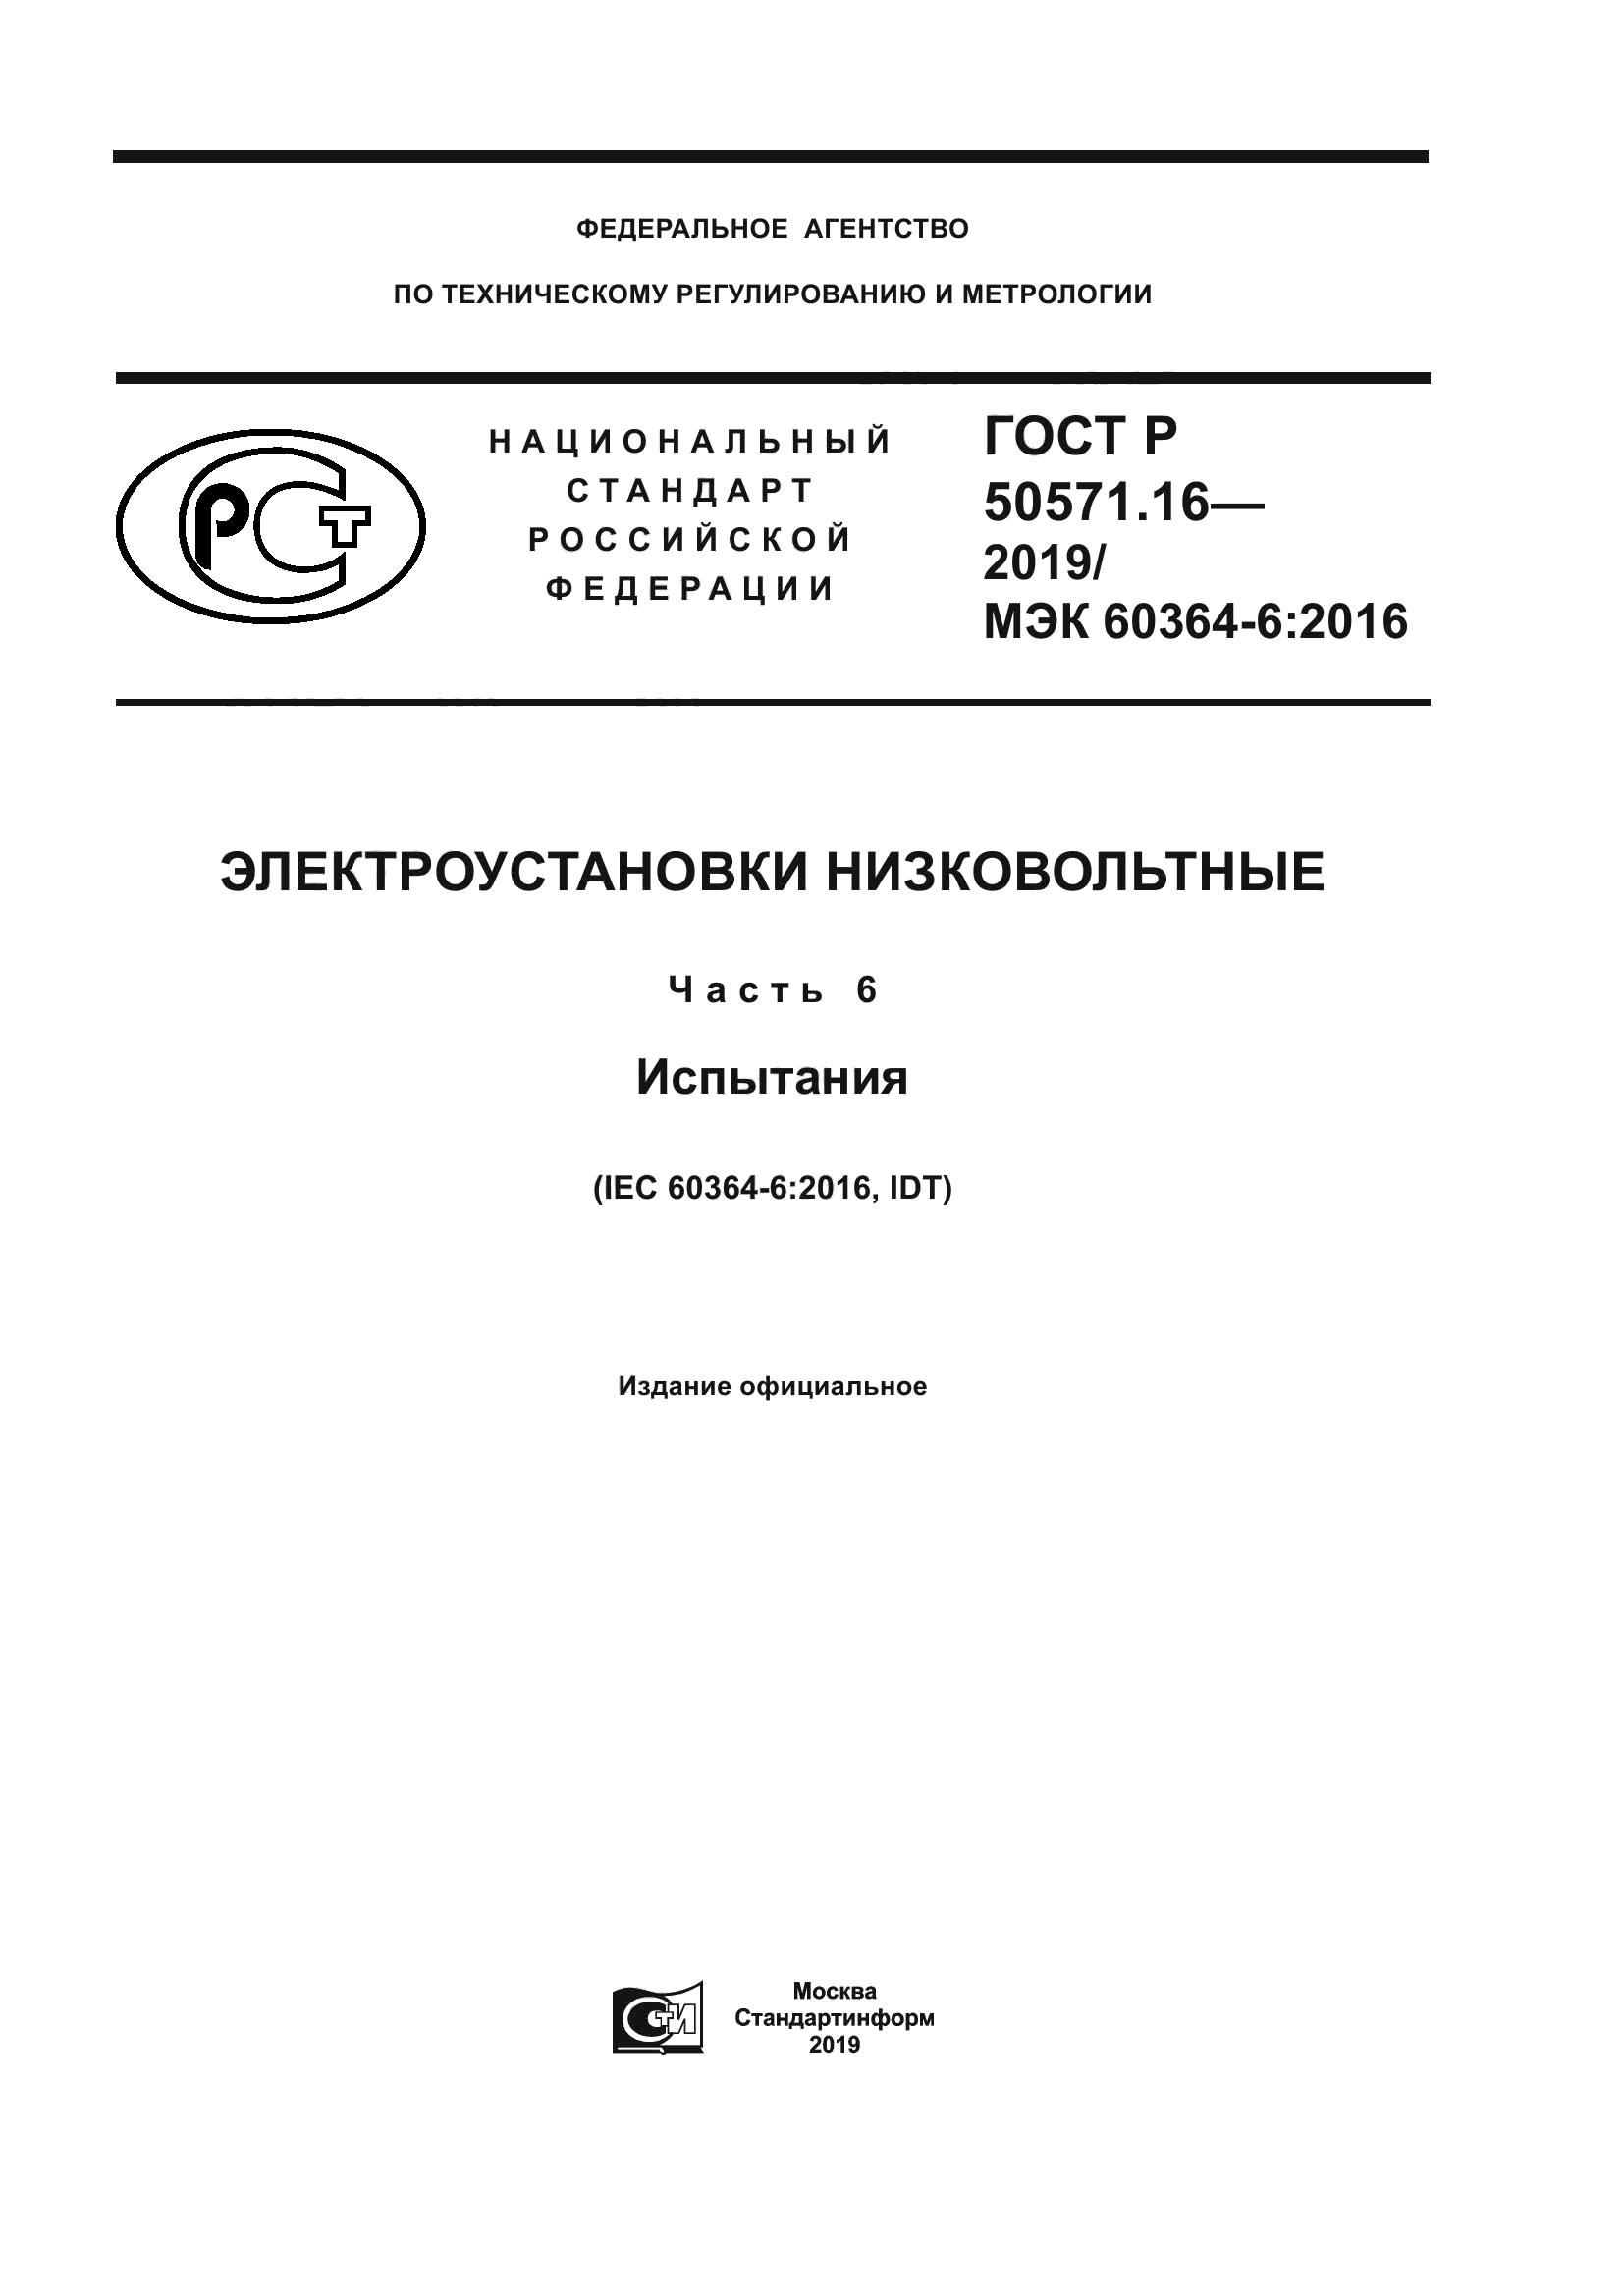 ГОСТ Р 50571.16-2019